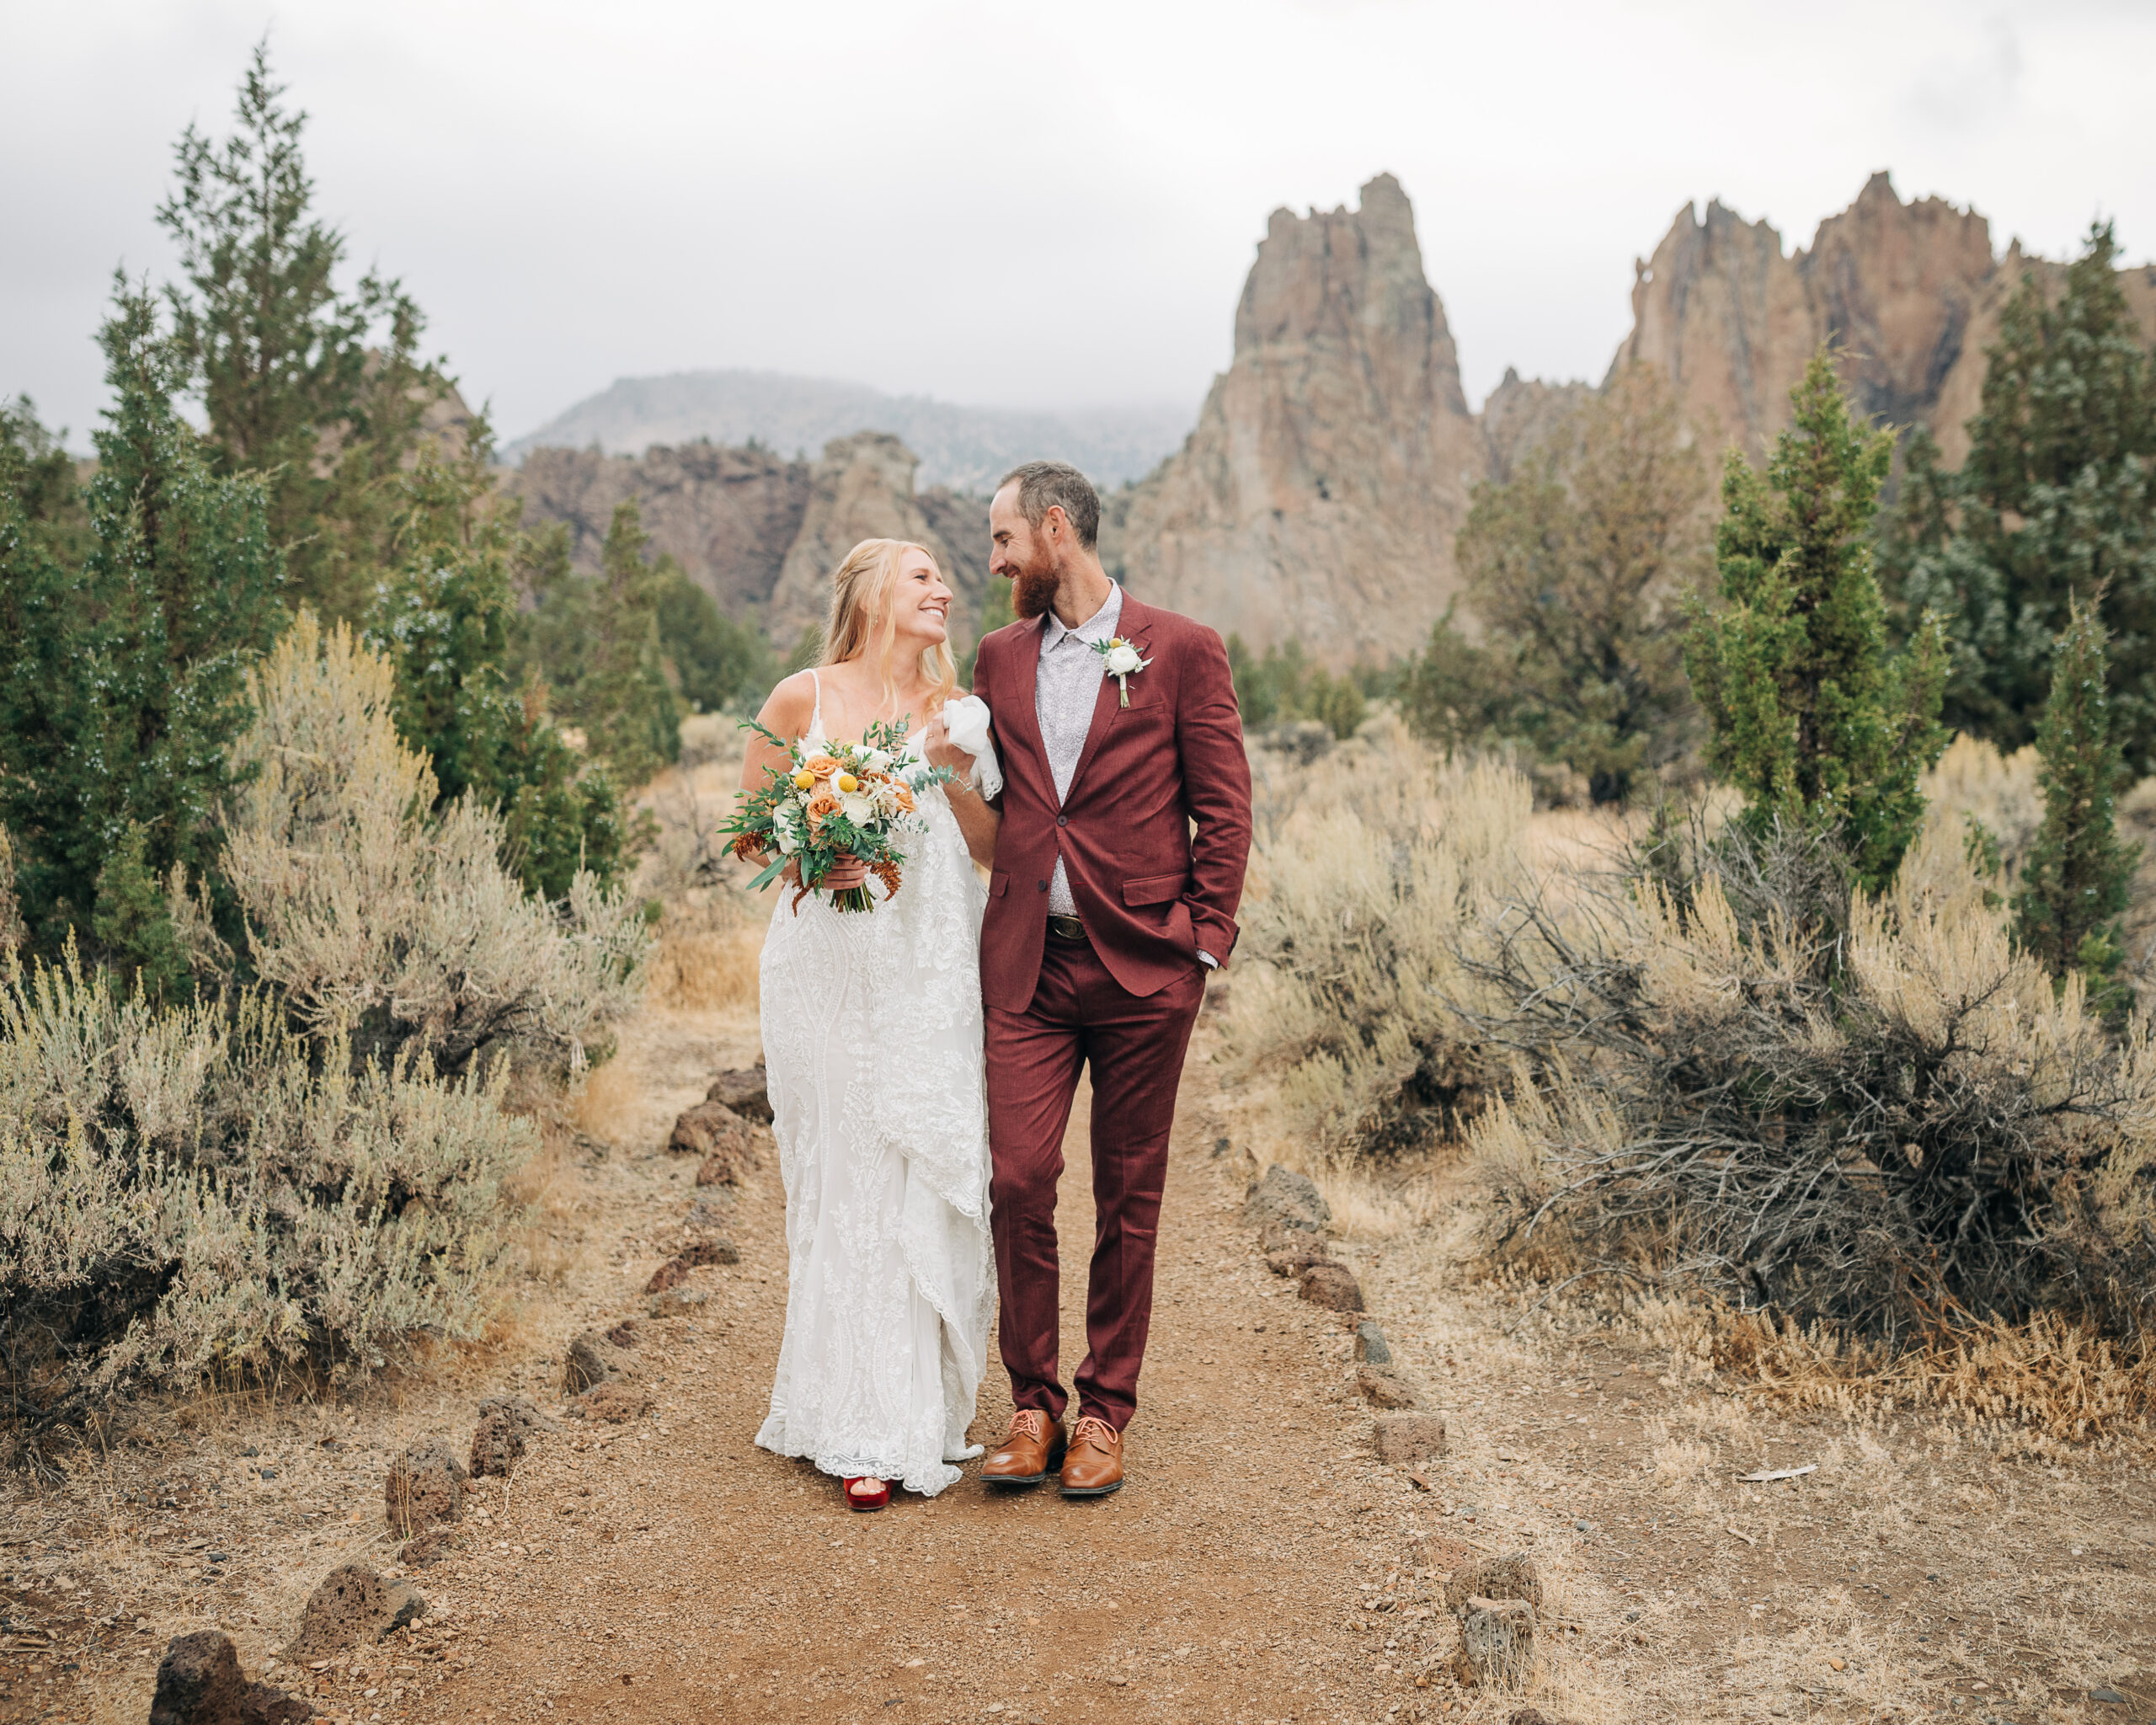 Smith rock intimate wedding ceremony. Bend Oregon weddings